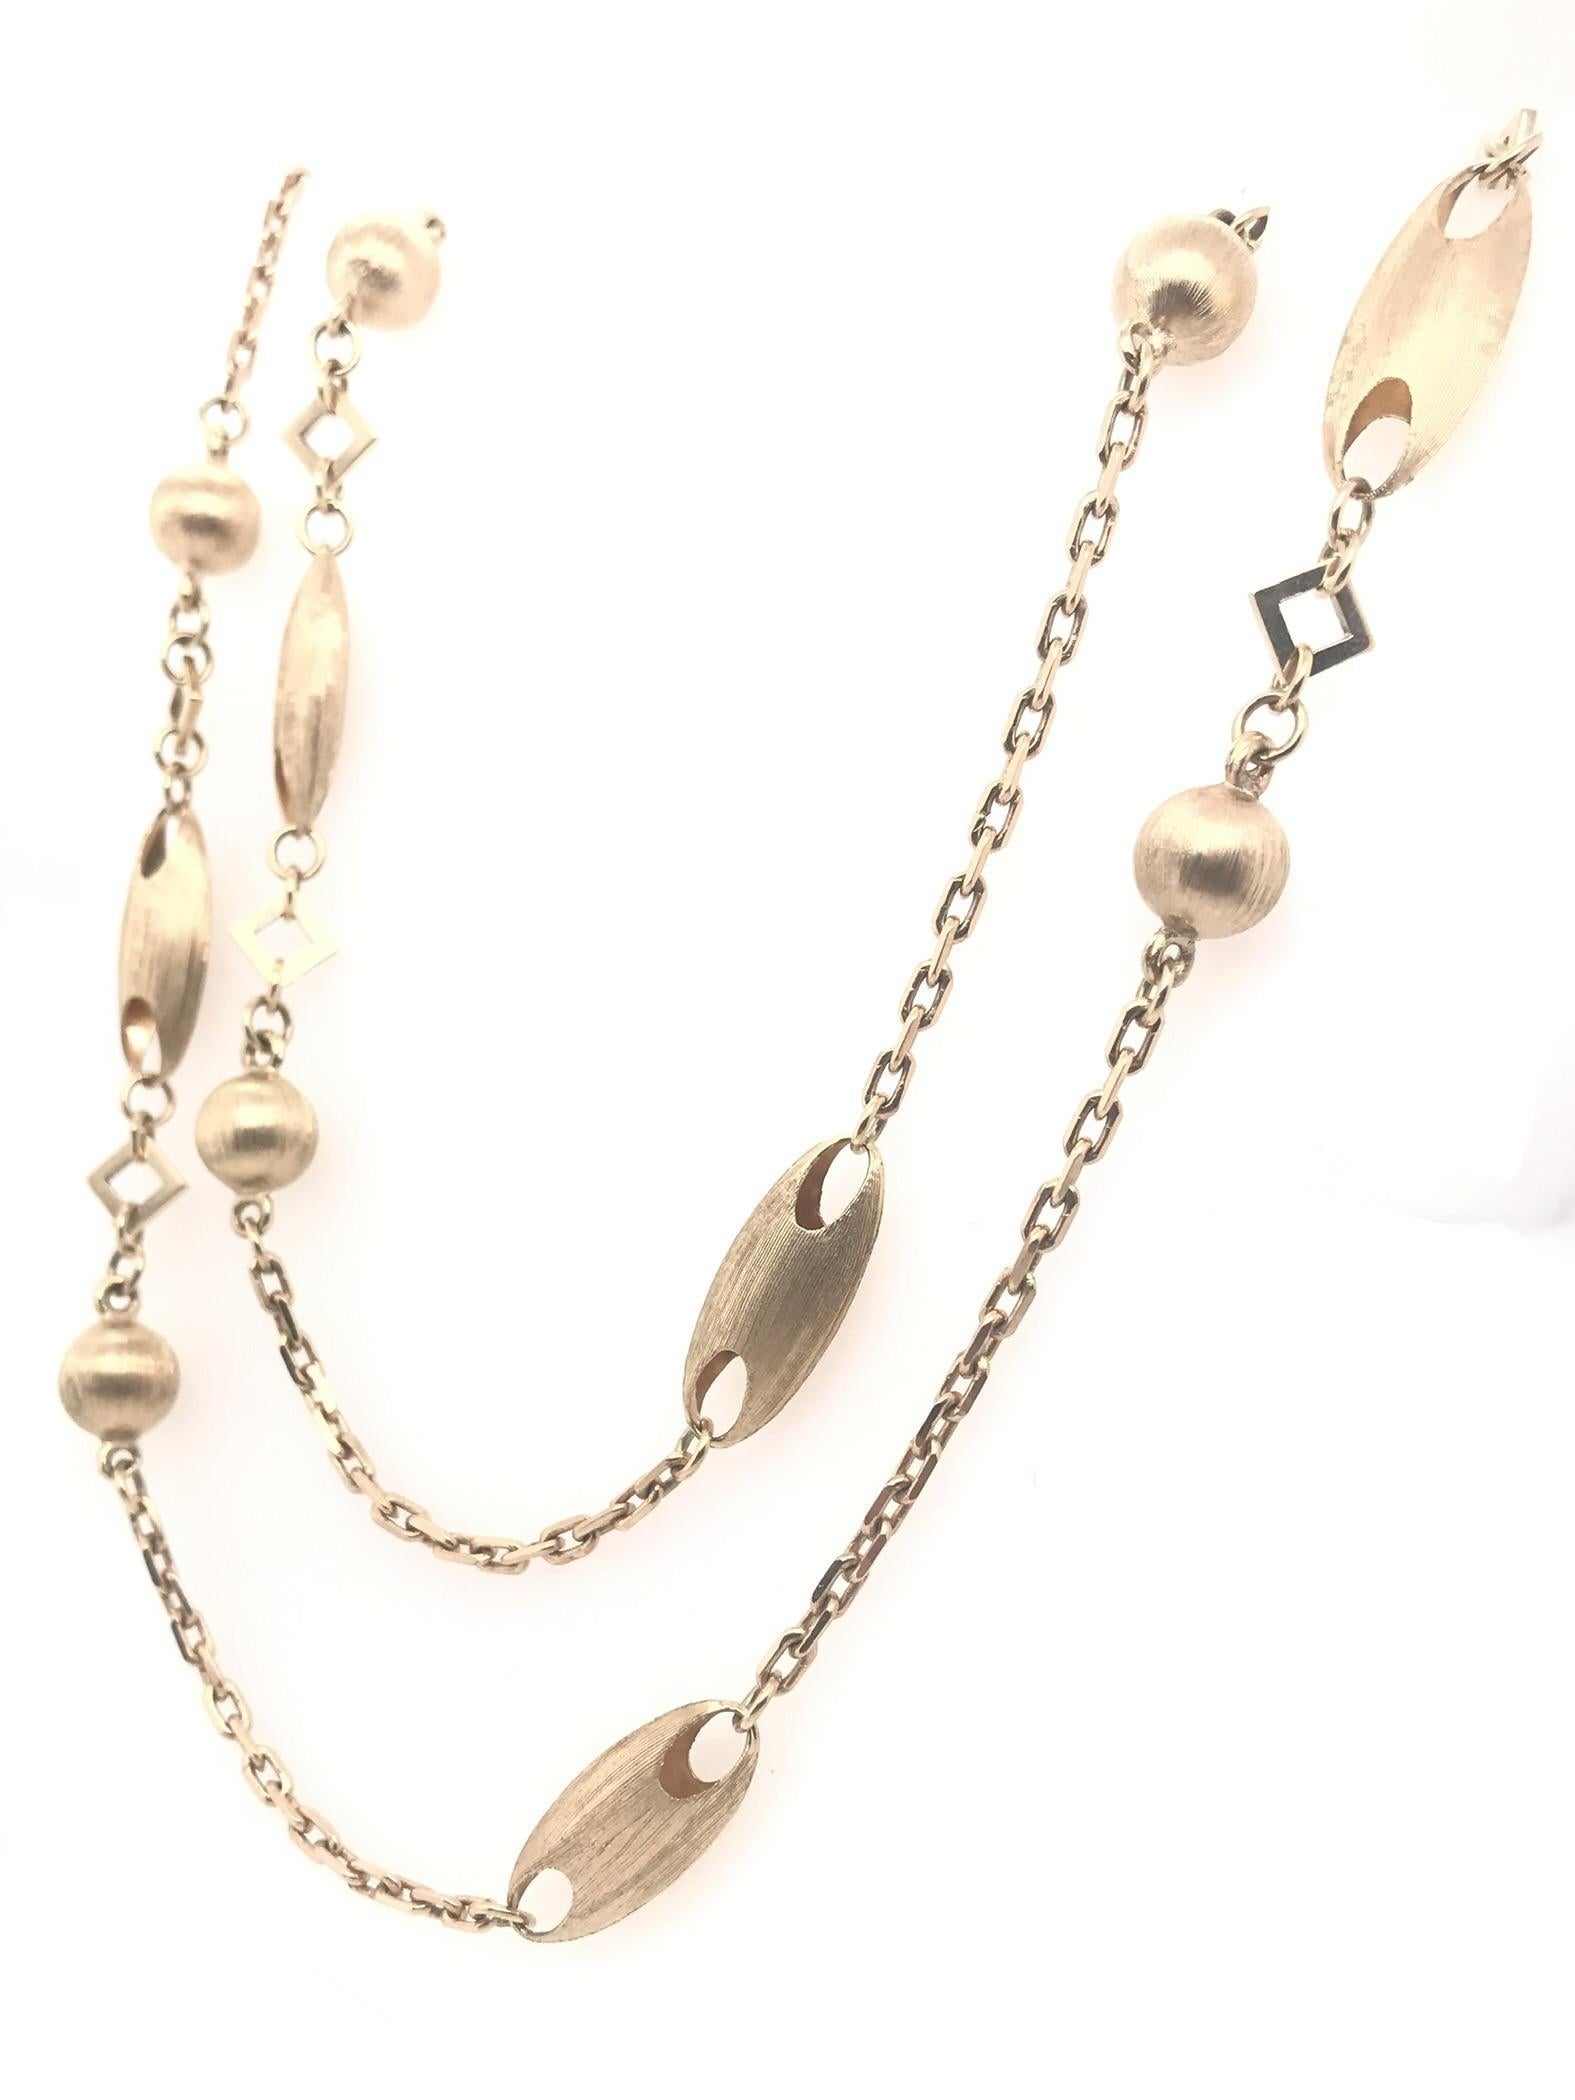 Contemporary Estate Italian 27 Inch Gold Chain Necklace In Excellent Condition For Sale In Montgomery, AL